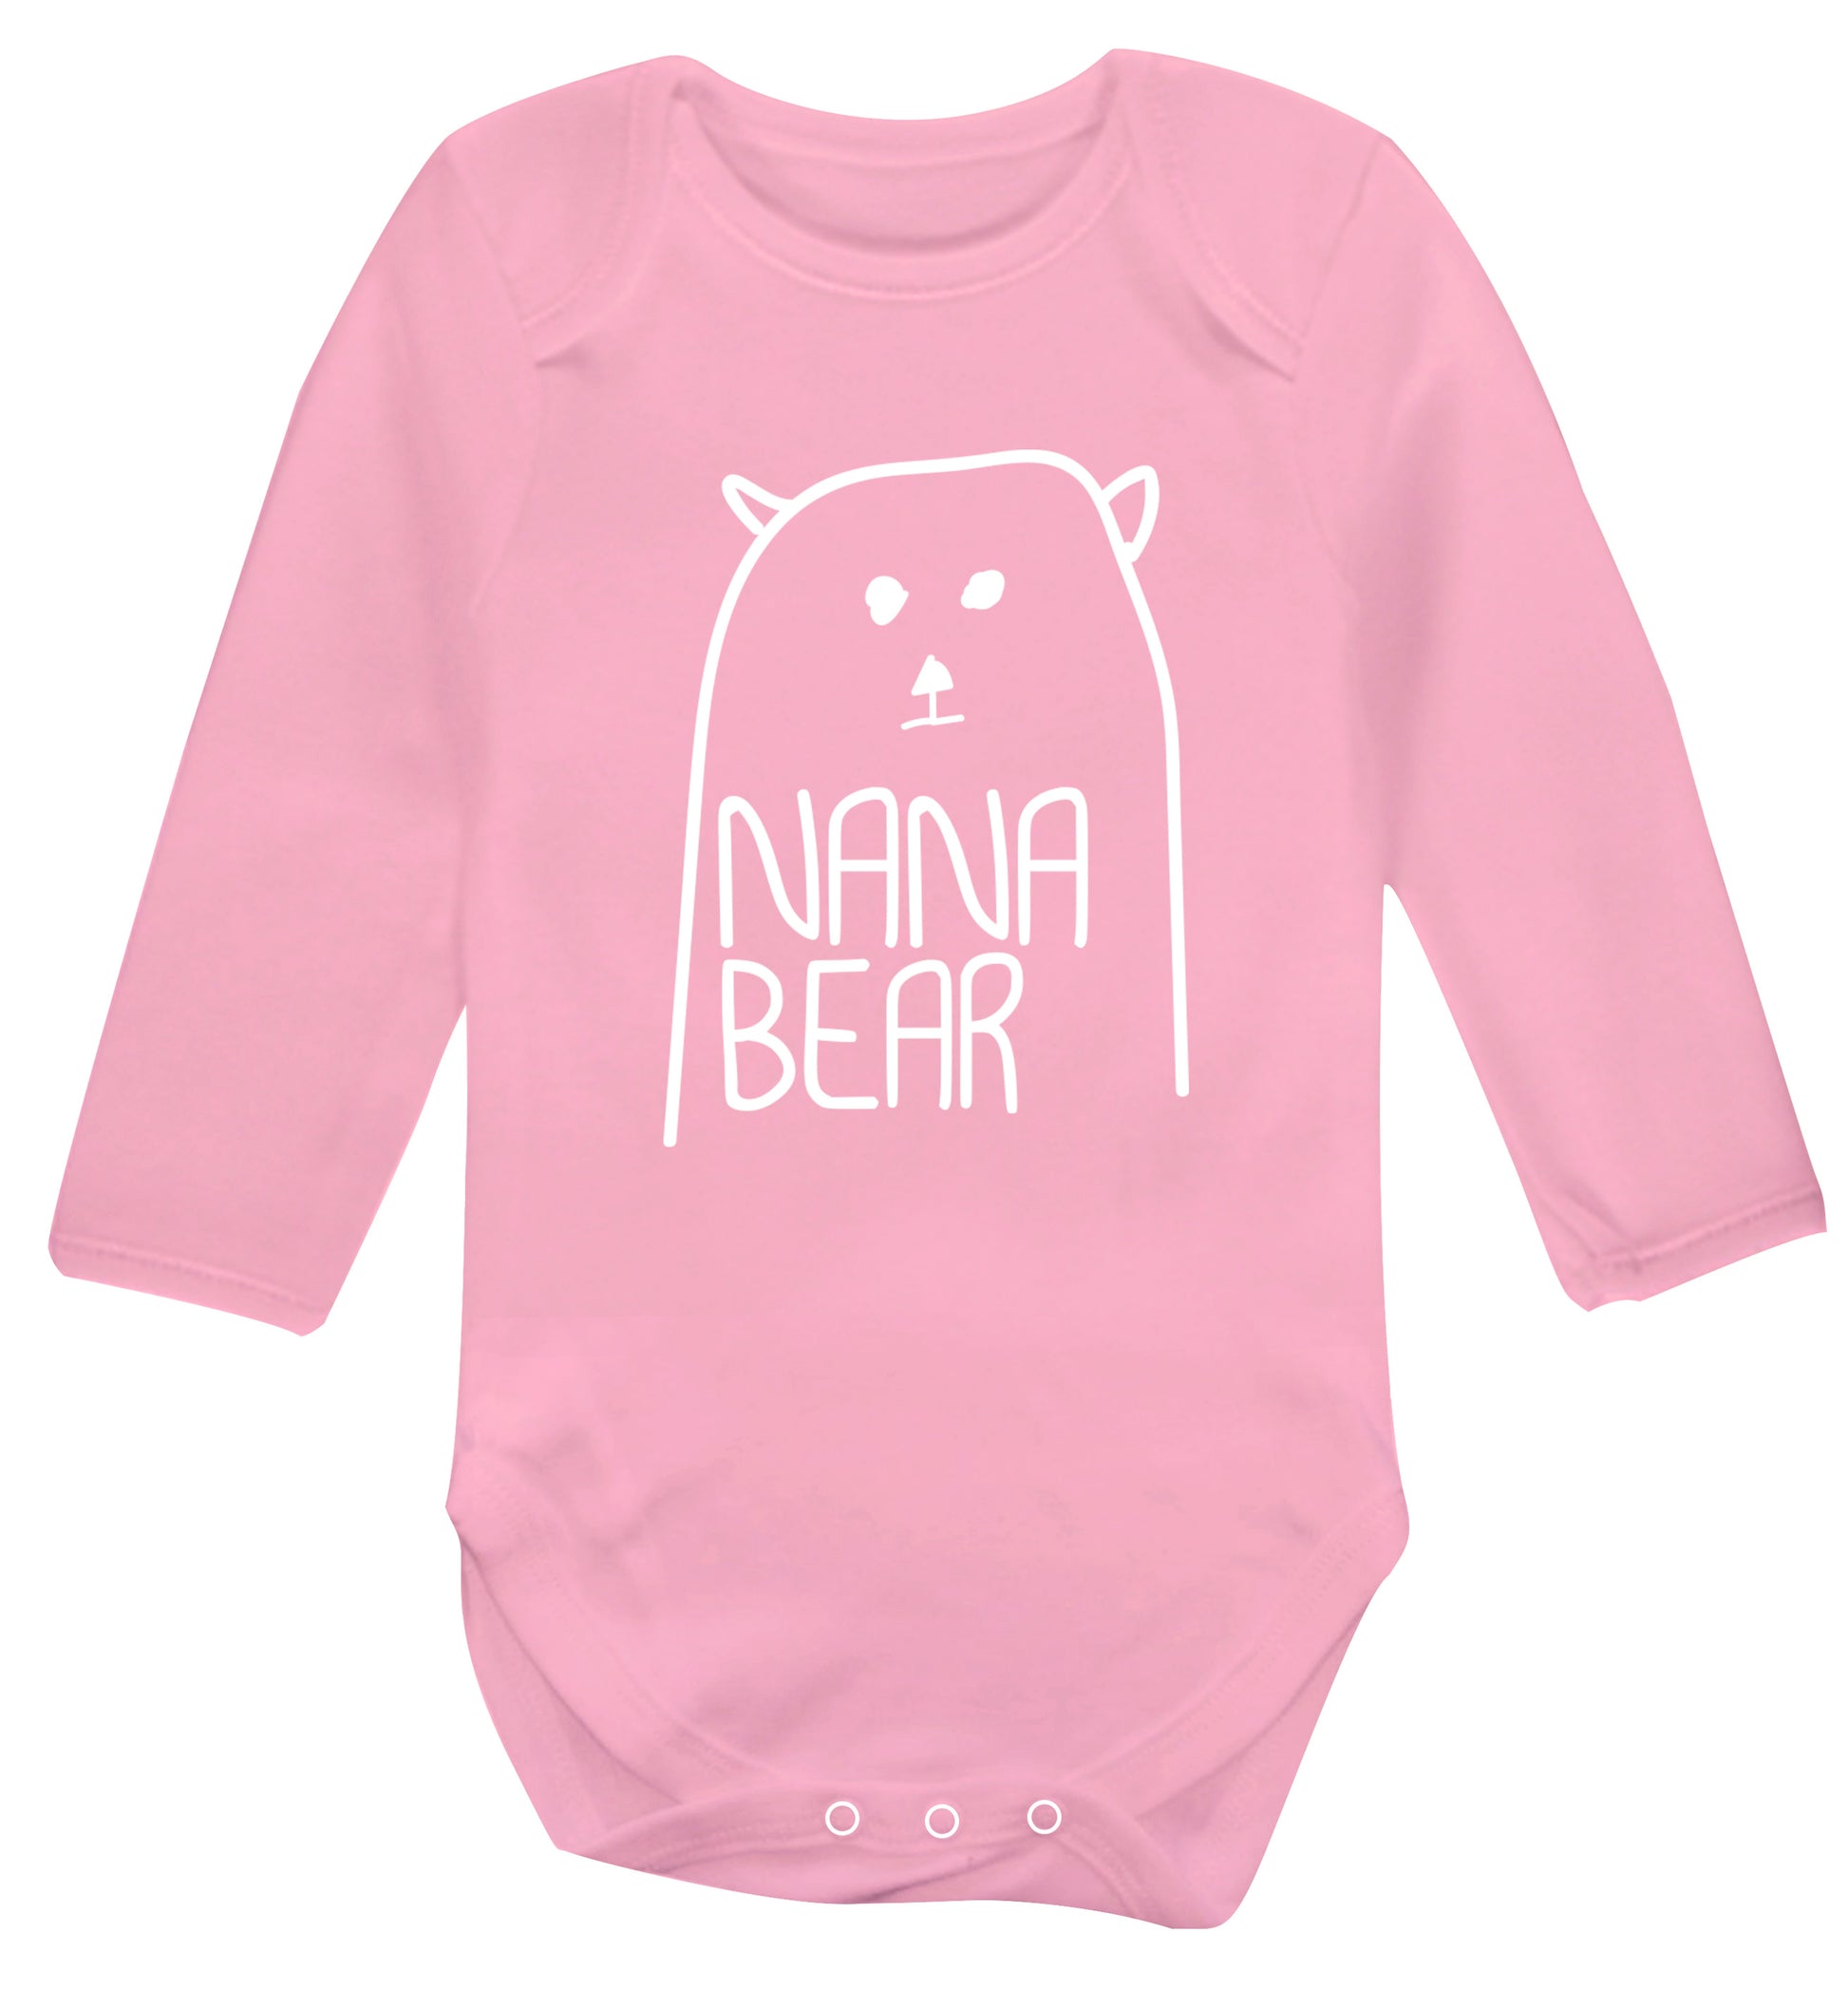 Nana bear Baby Vest long sleeved pale pink 6-12 months